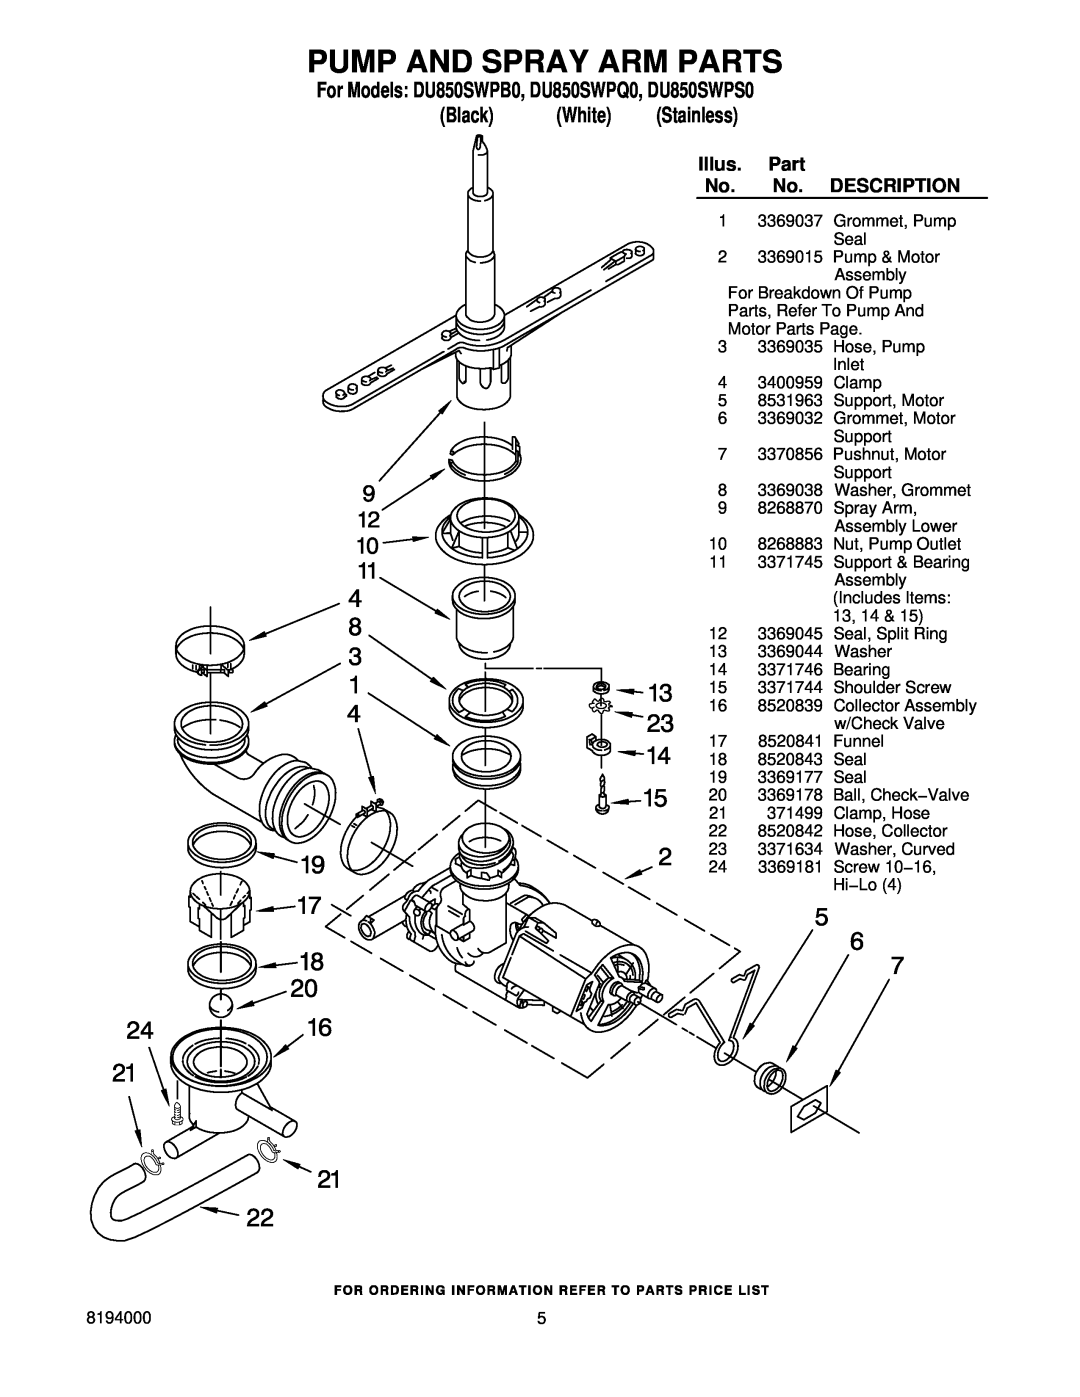 Whirlpool manual Pump And Spray Arm Parts, Illus, Description, For Models DU850SWPB0, DU850SWPQ0, DU850SWPS0 